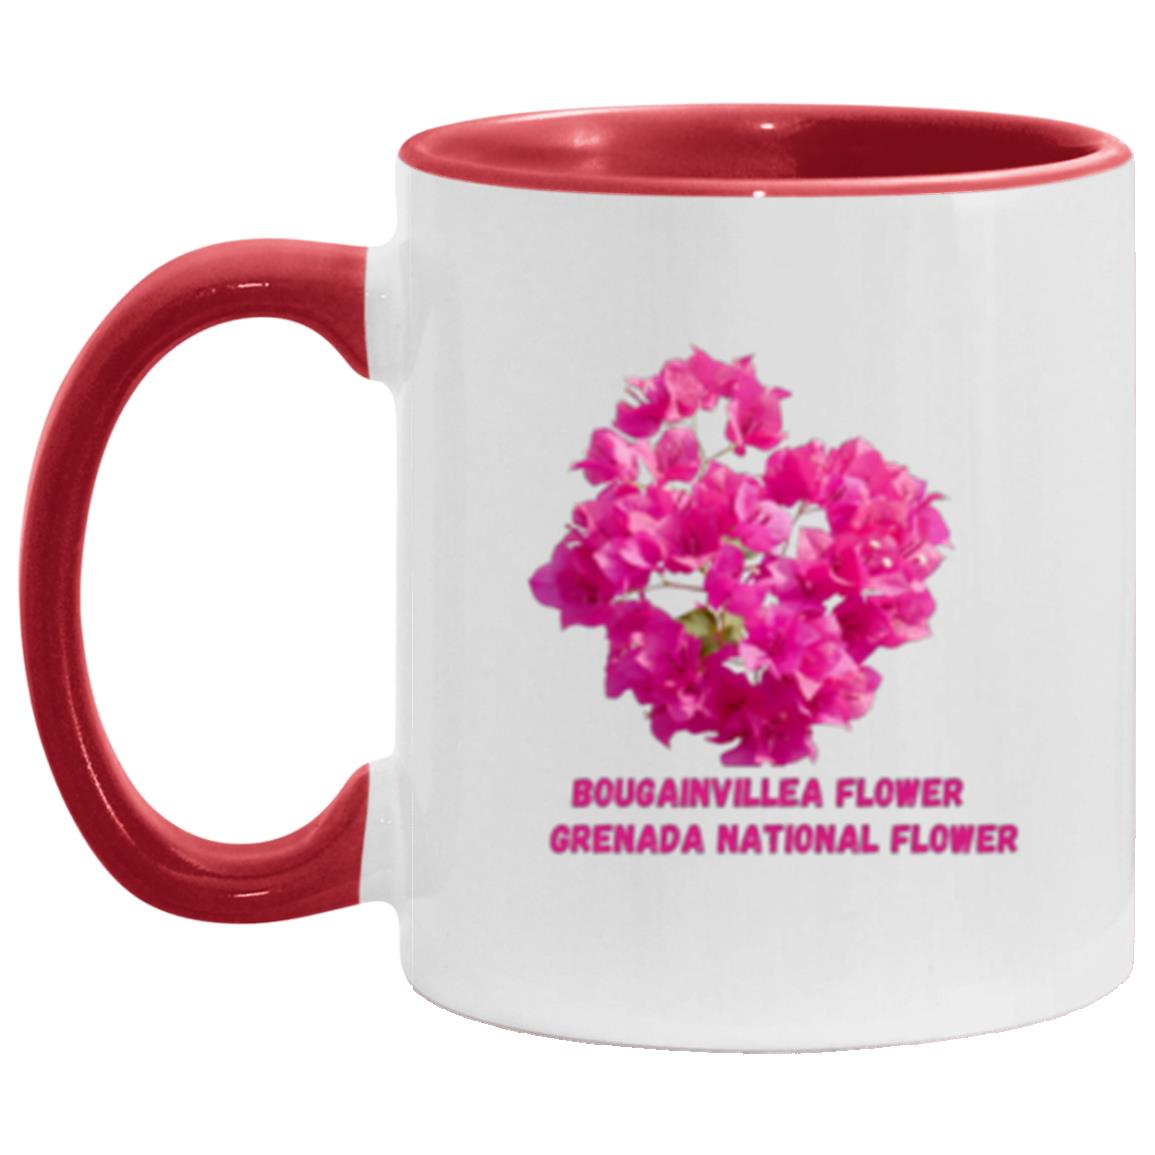 Grenada Isle of Spice National Flower Mug